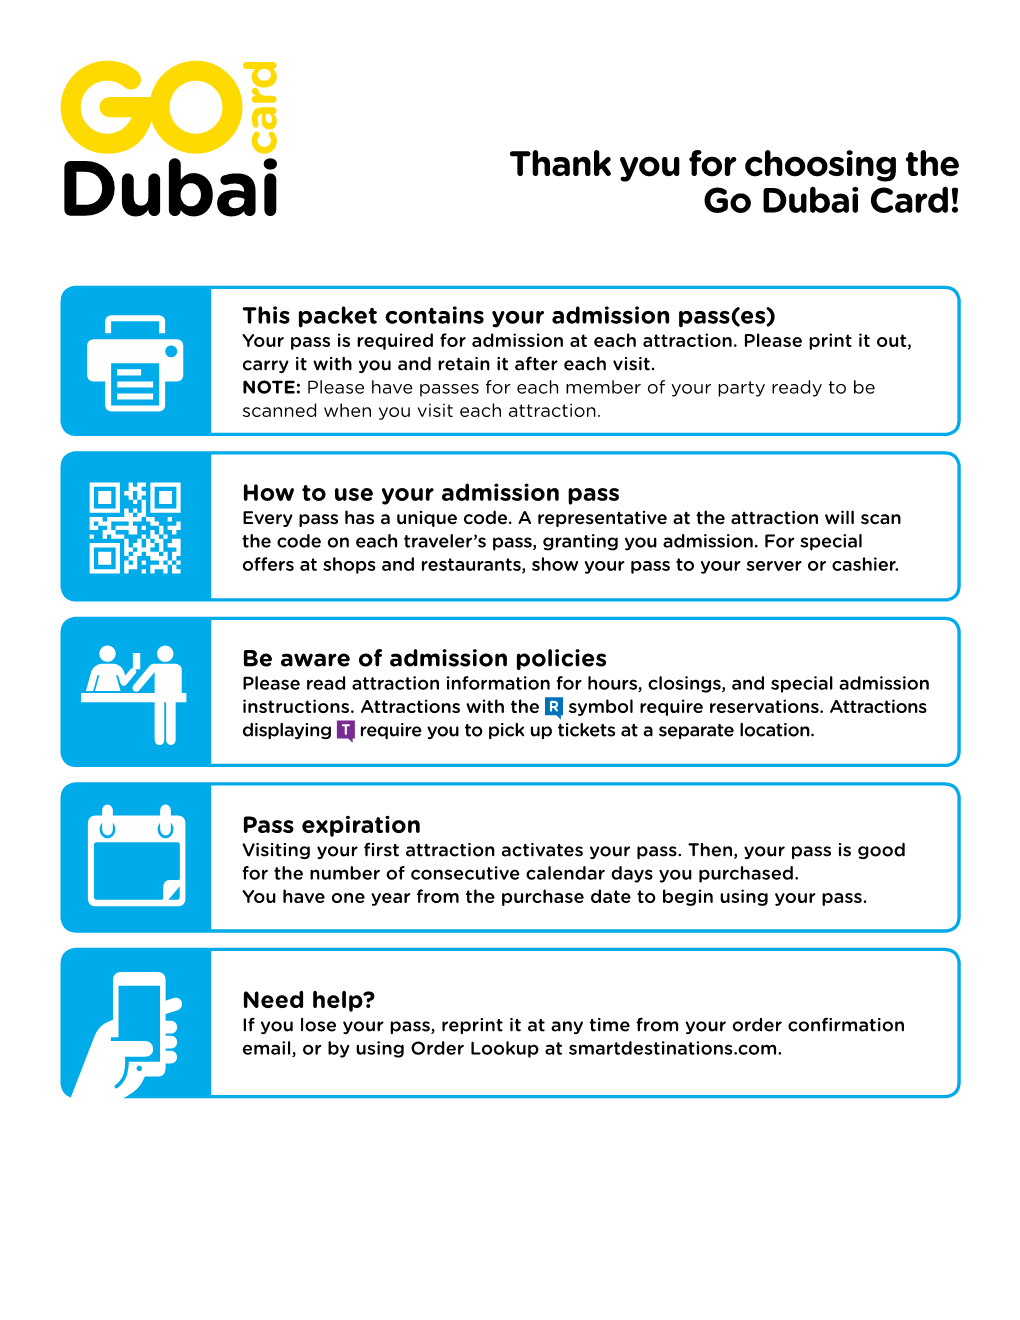 Thank You for Choosing the Go Dubai Card!